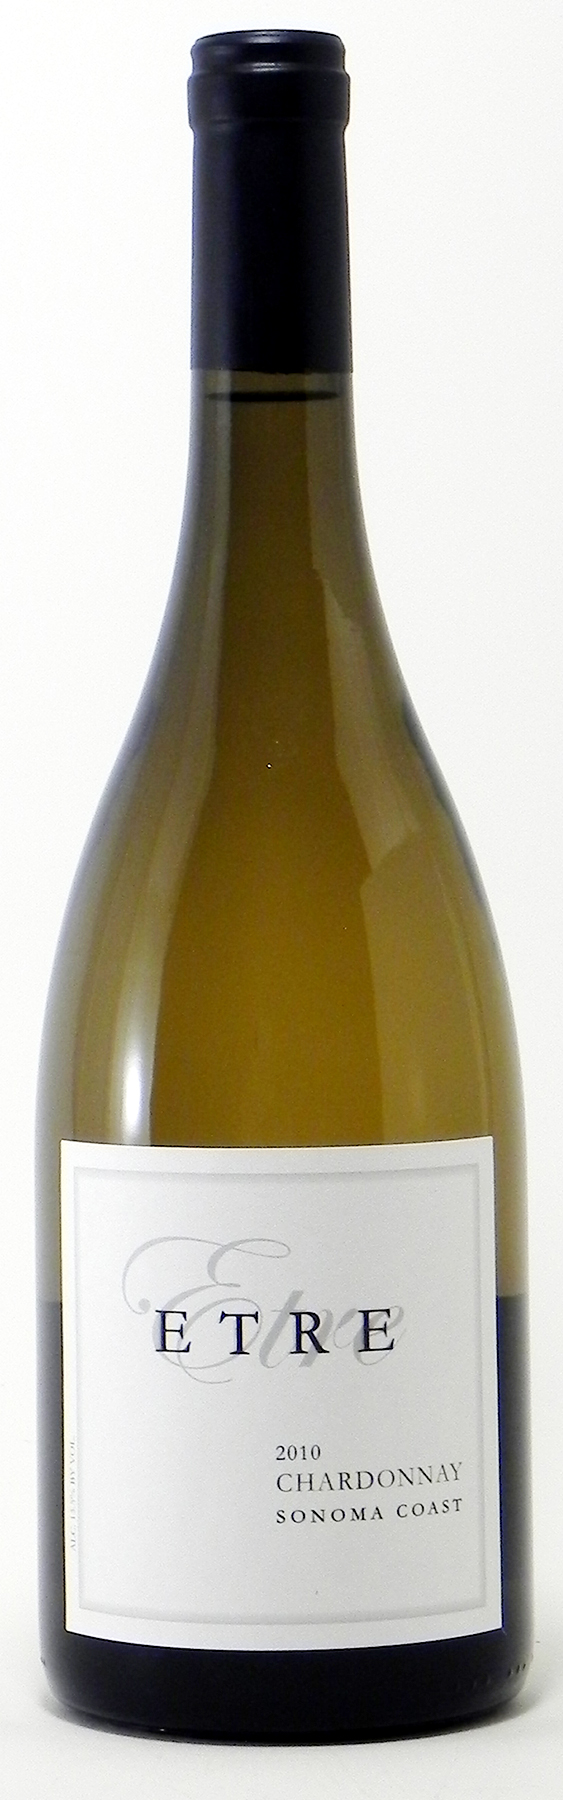 2010 Être Chardonnay